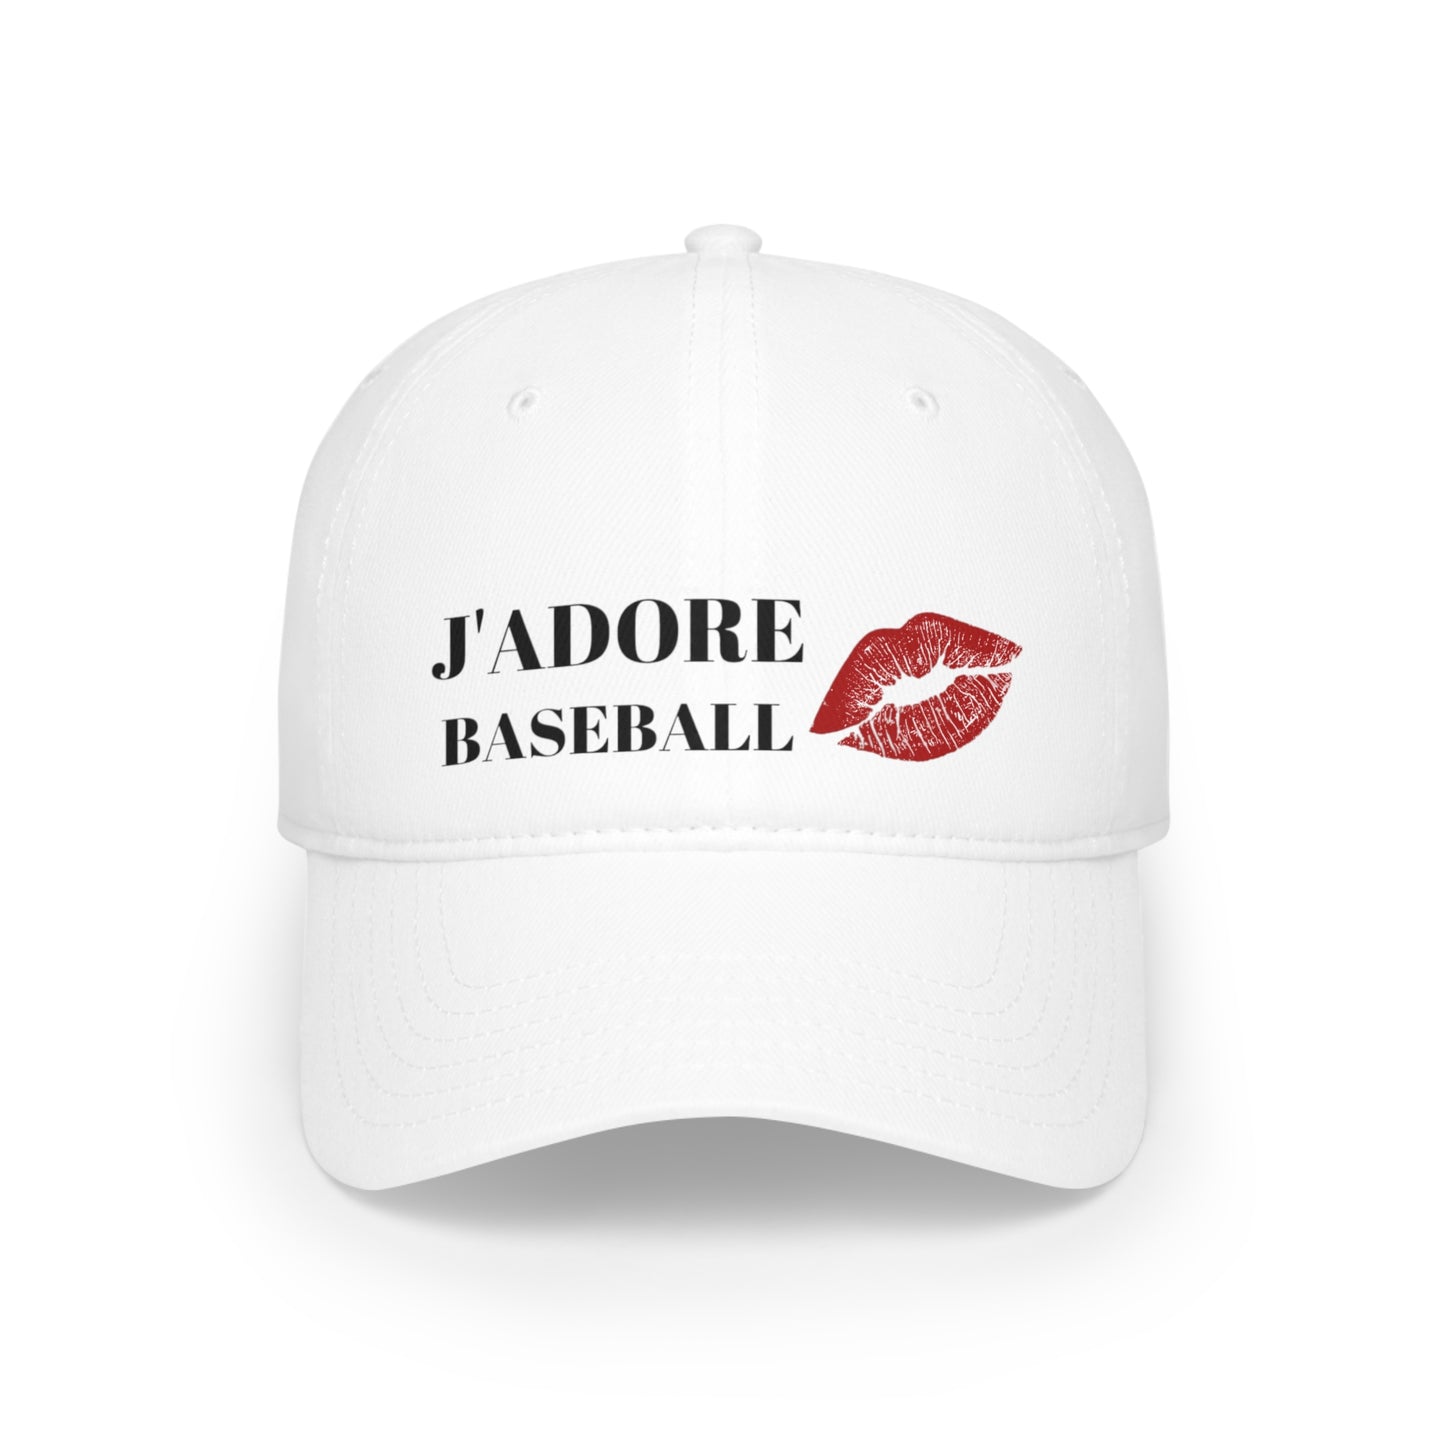 J'Adore Baseball : Low Profile Baseball Cap